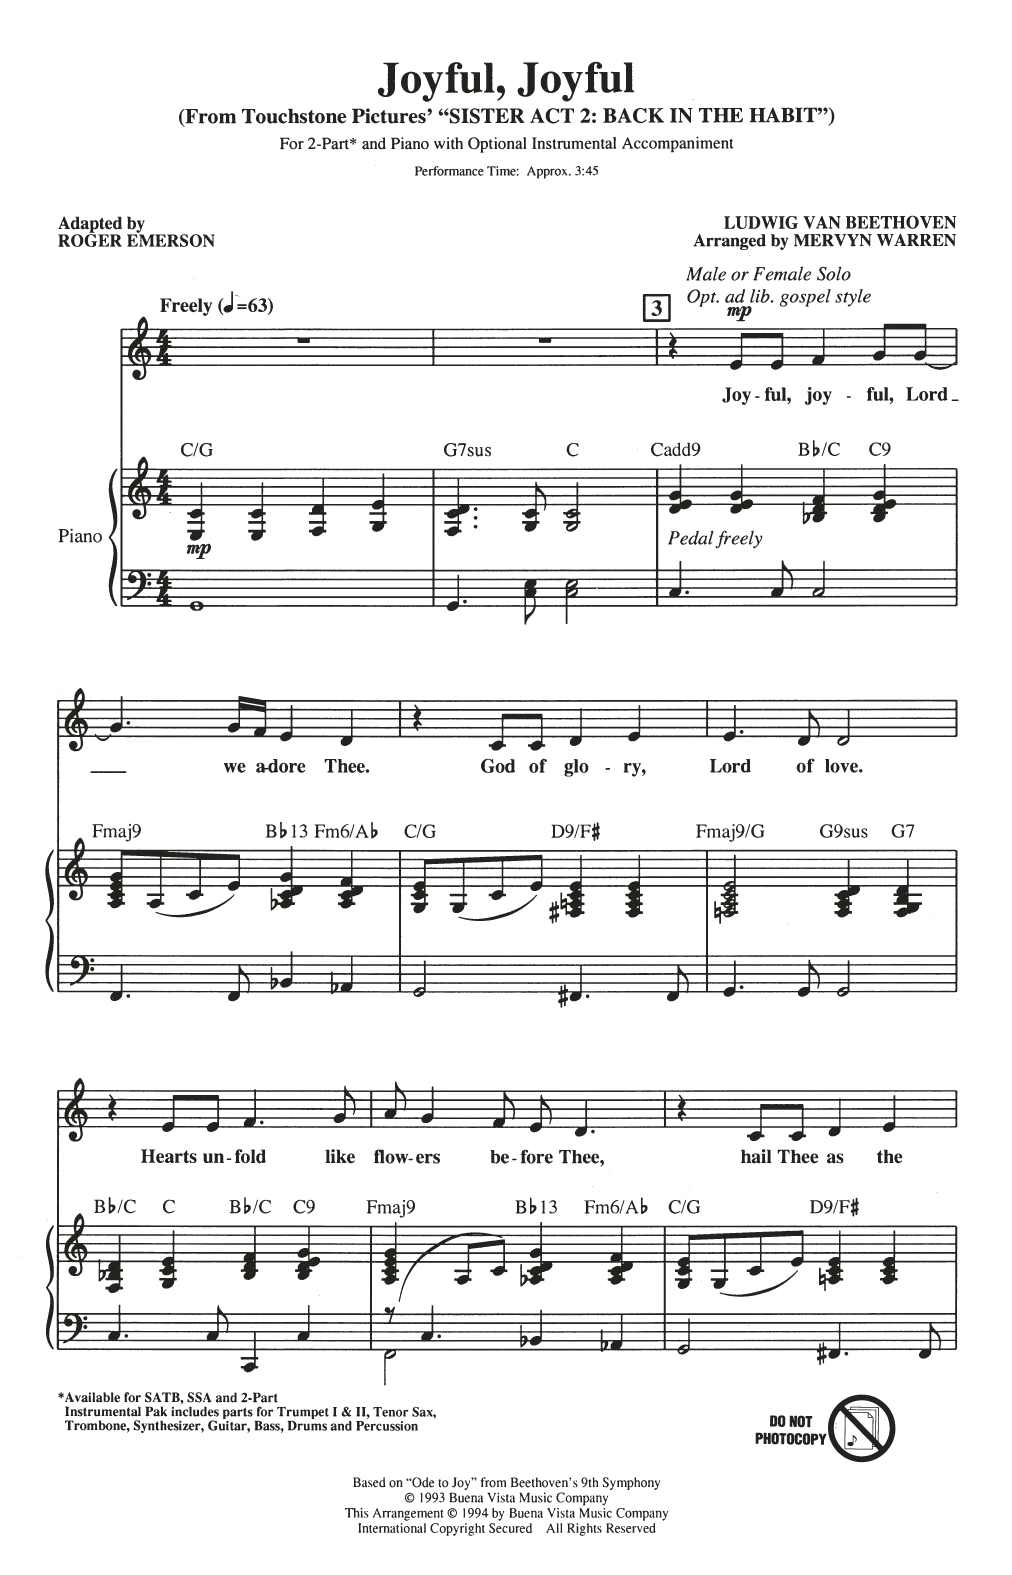 Mervyn Warren Joyful, Joyful (from Sister Act 2) (arr. Roger Emerson) Sheet Music Notes & Chords for SATB Choir - Download or Print PDF